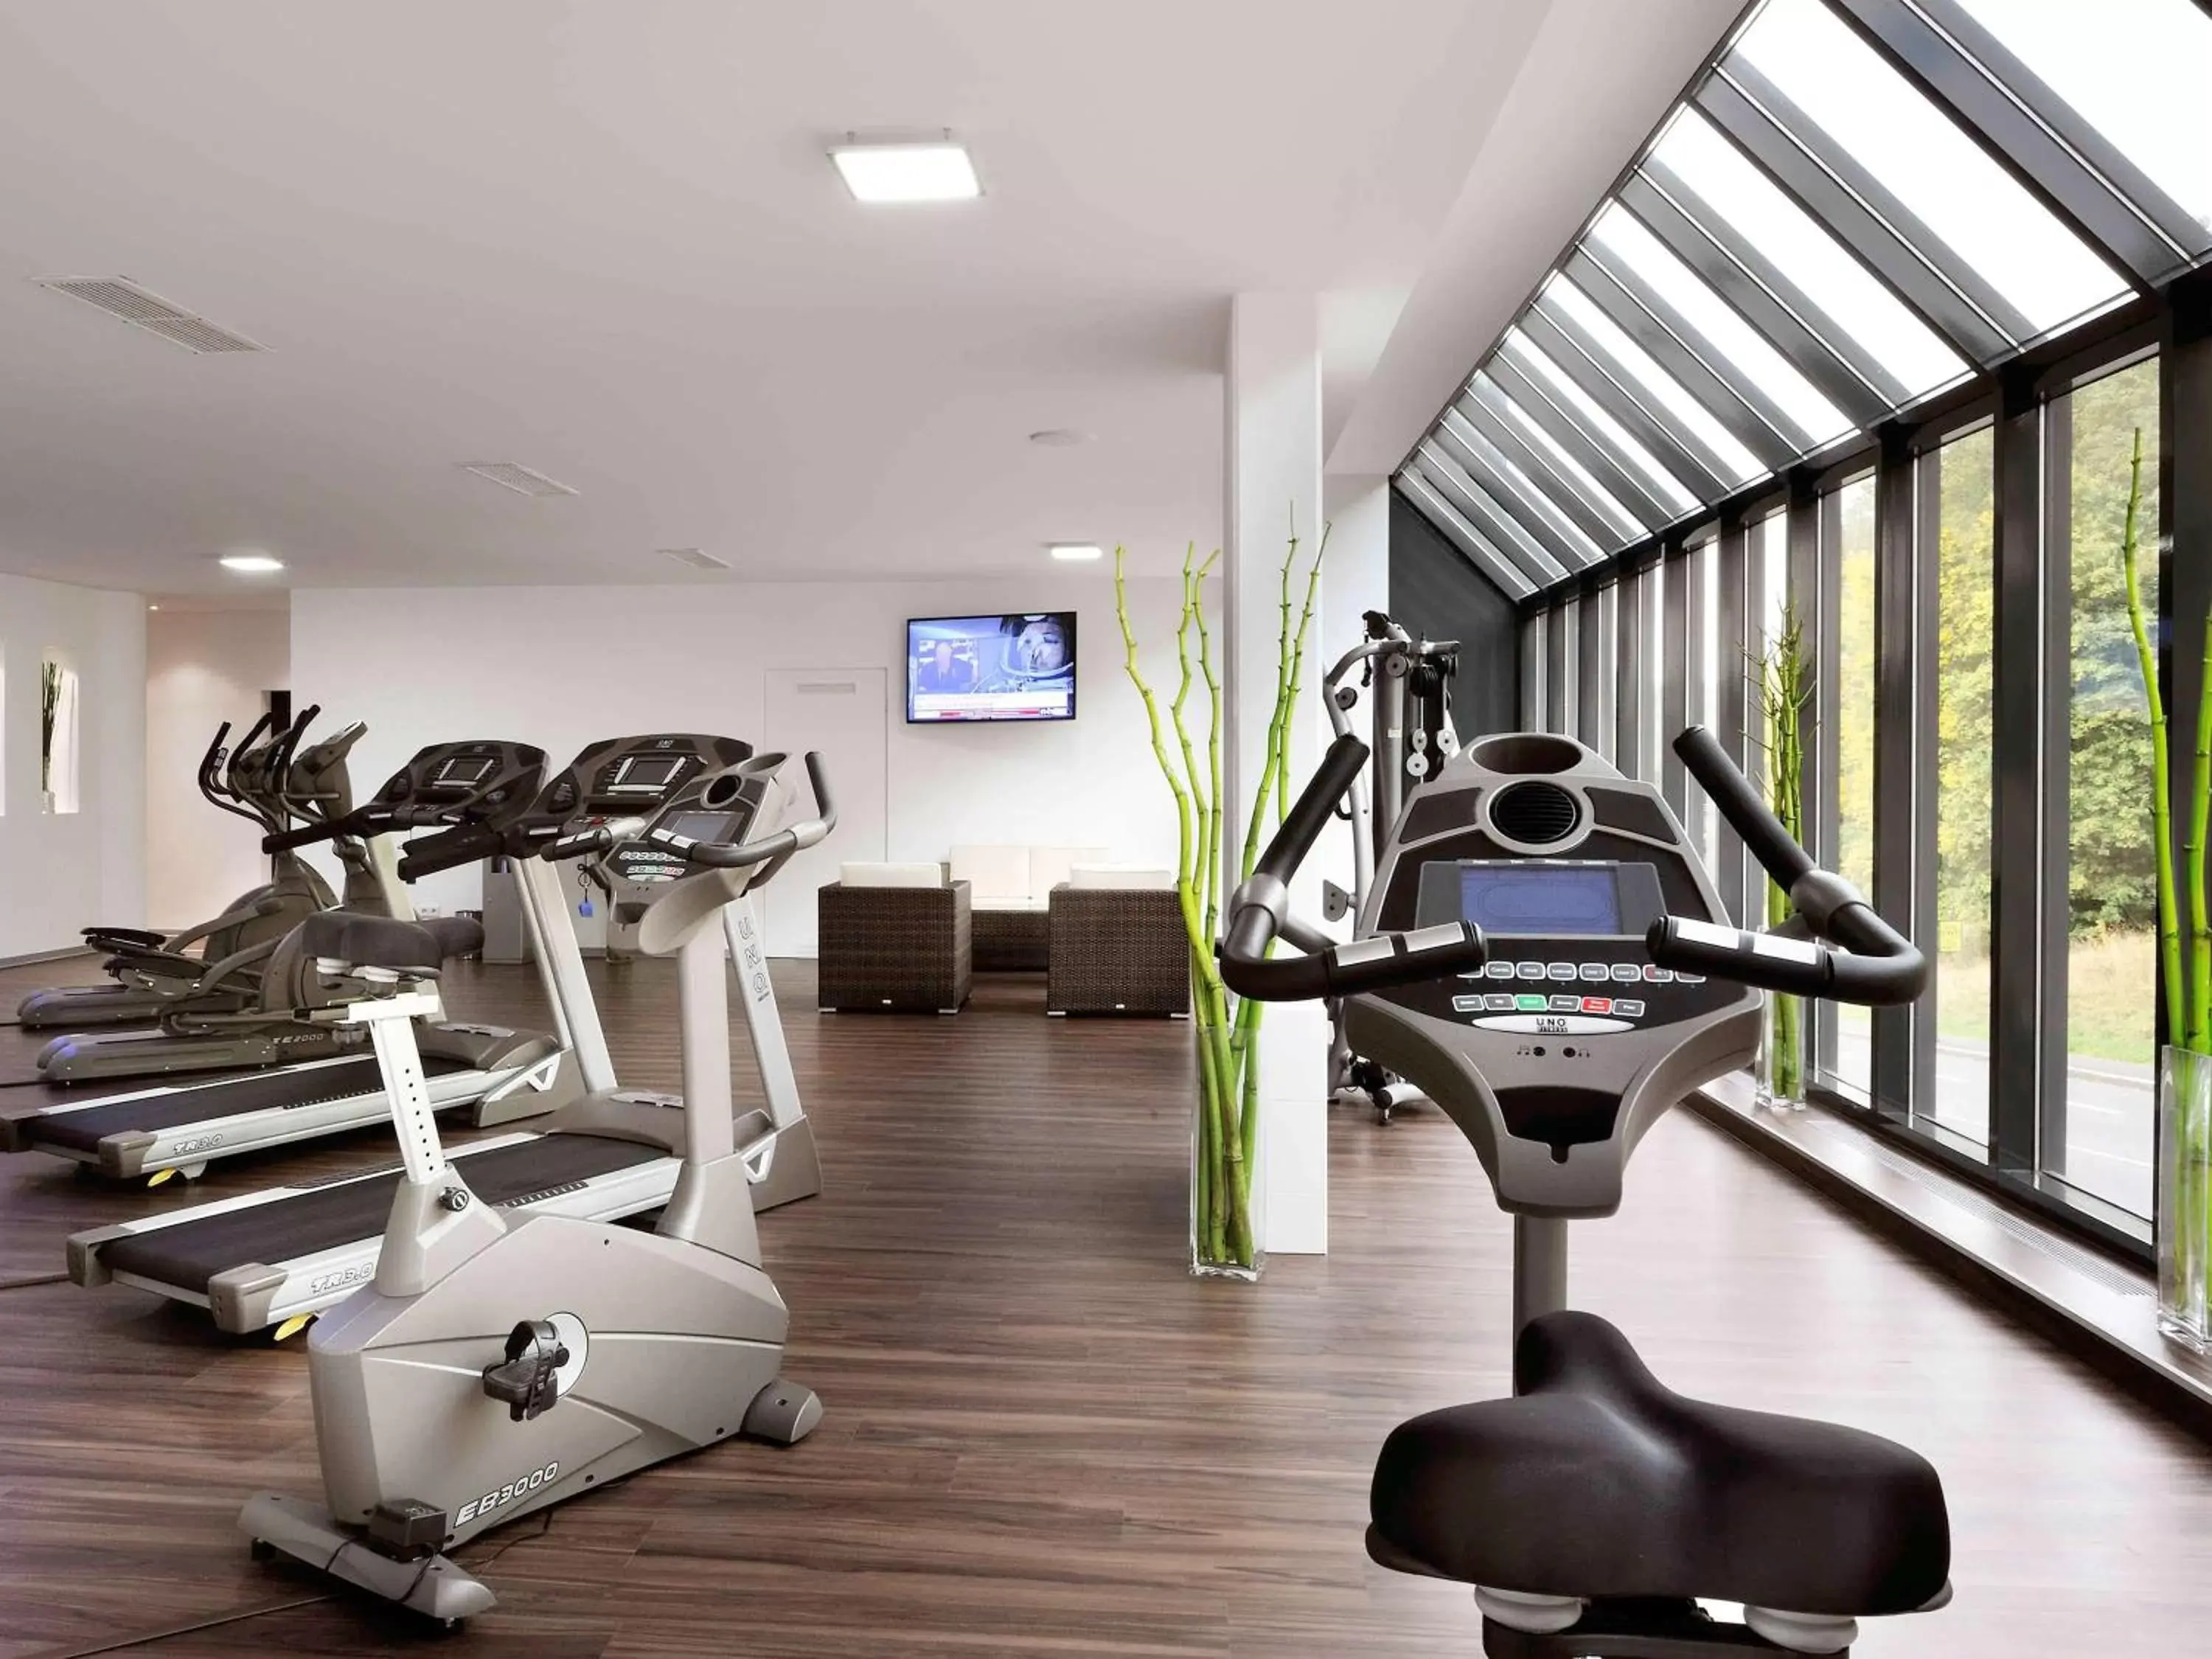 Fitness centre/facilities, Fitness Center/Facilities in Mercure Hotel Hagen